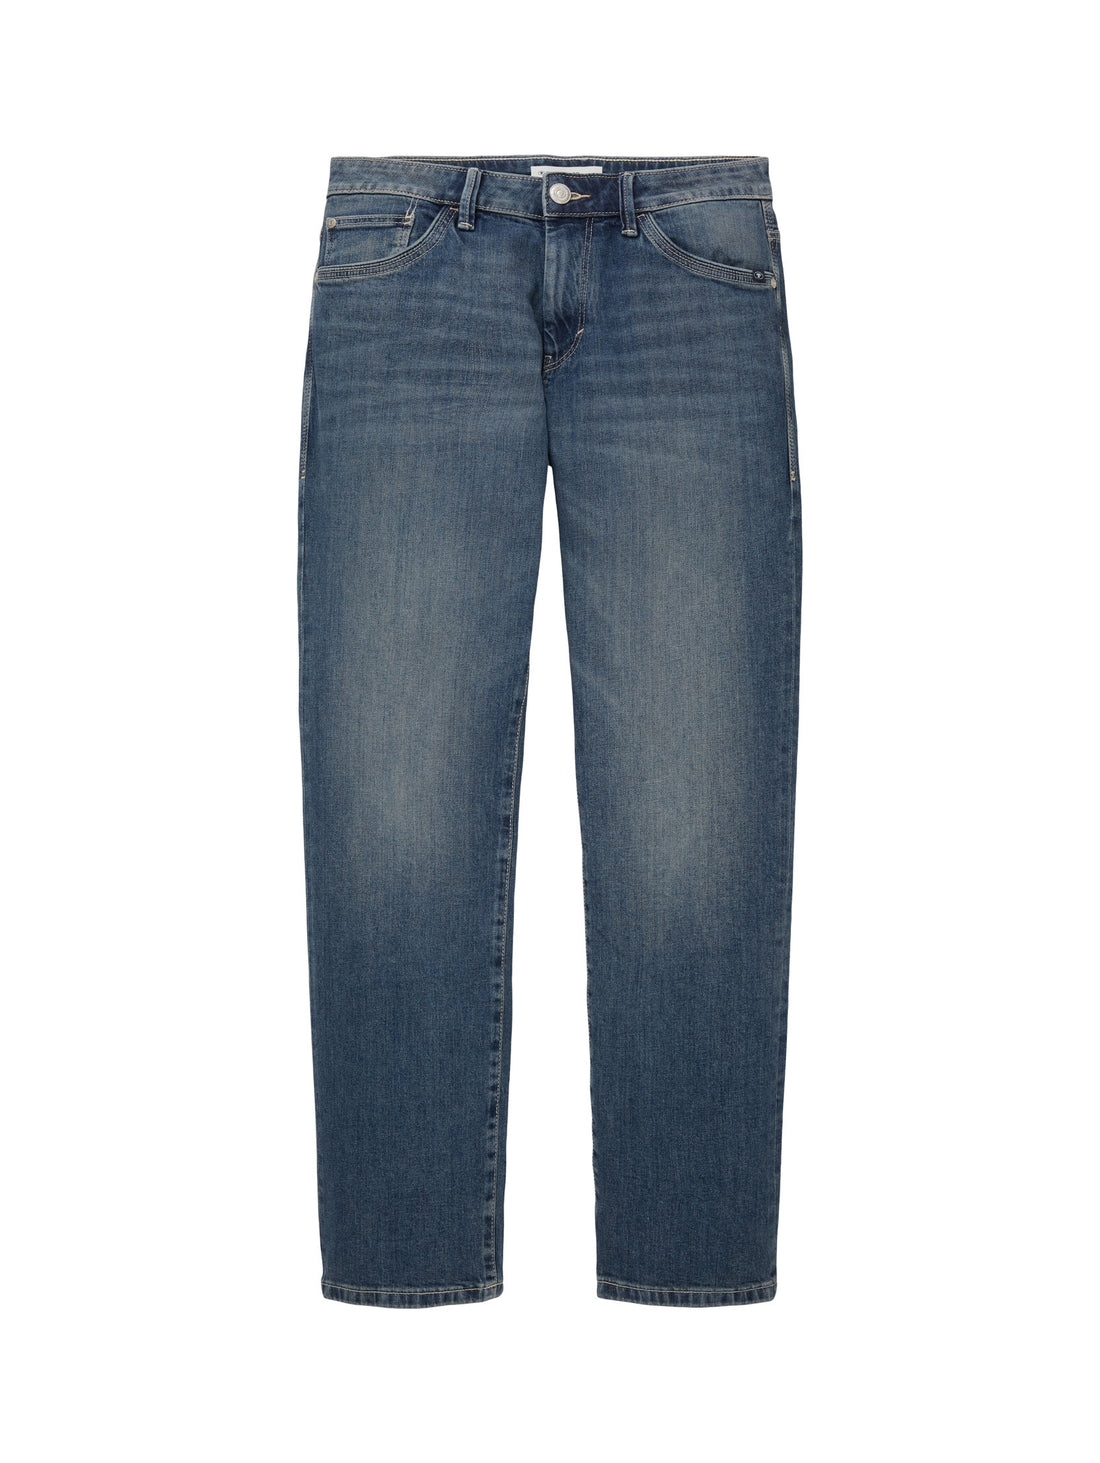 Standard Loose Fit Jeans_1035877_10281_01